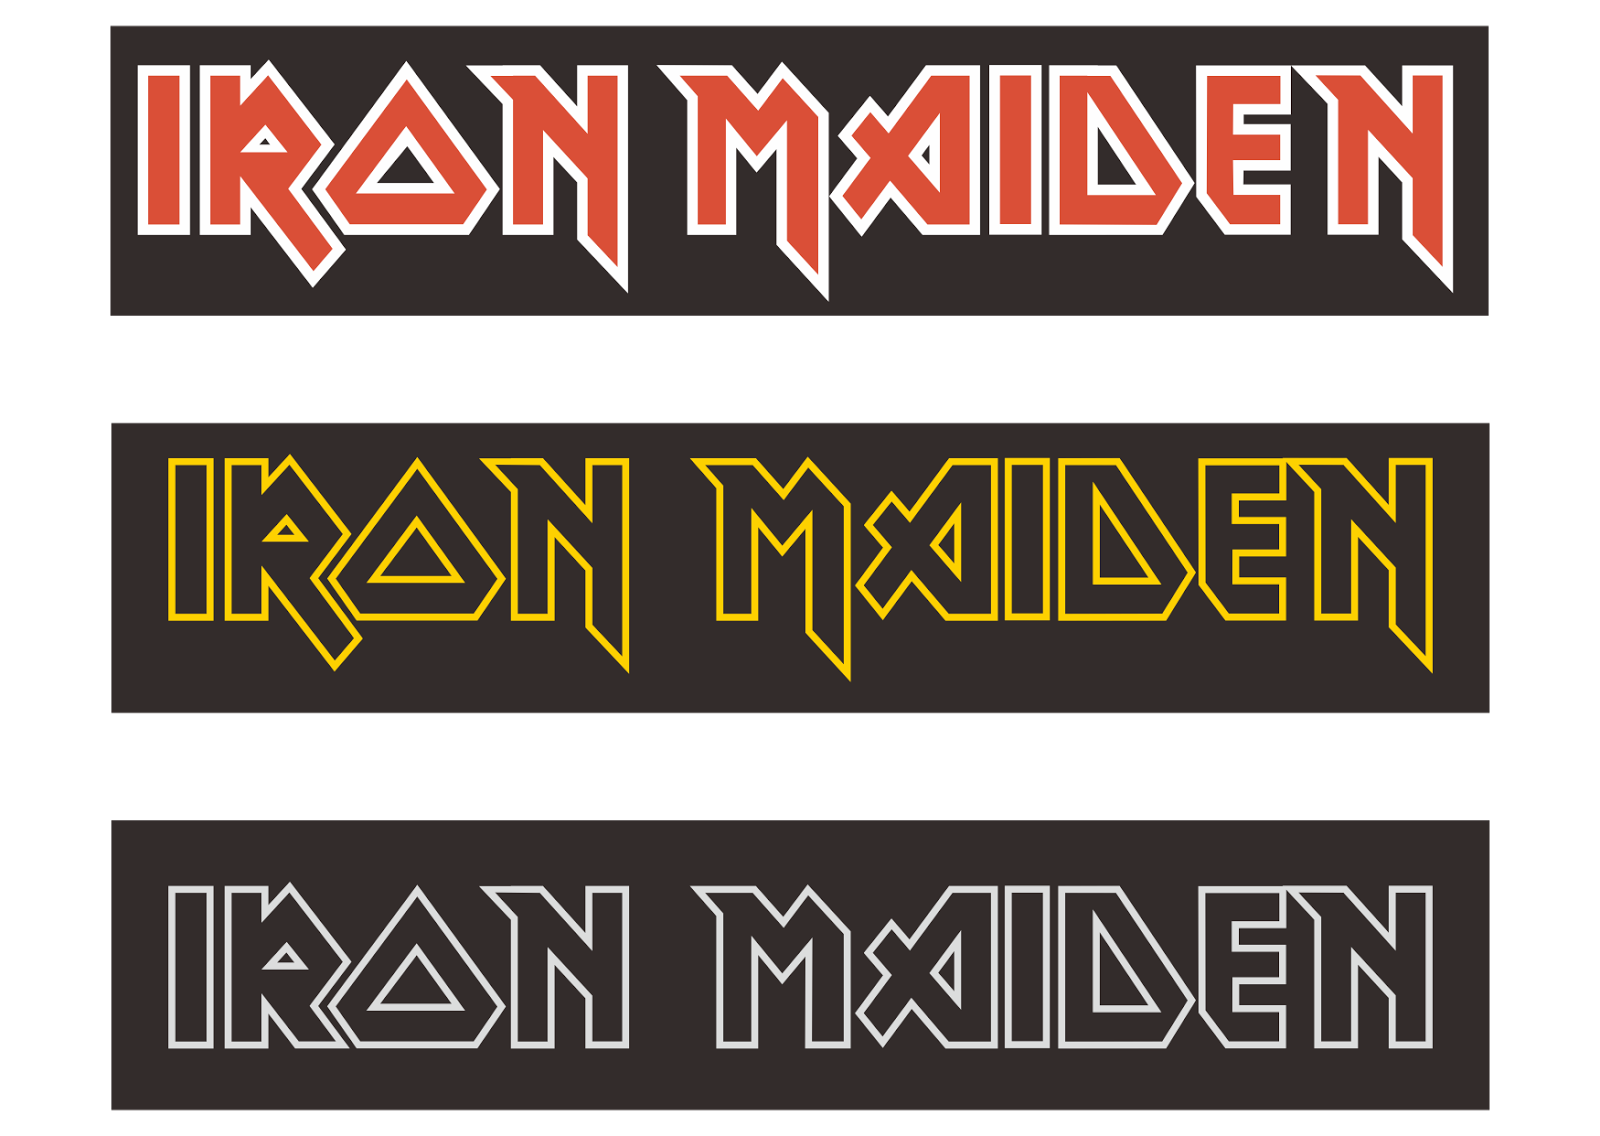 Iron Maiden - Rammstein - Hippodrome de